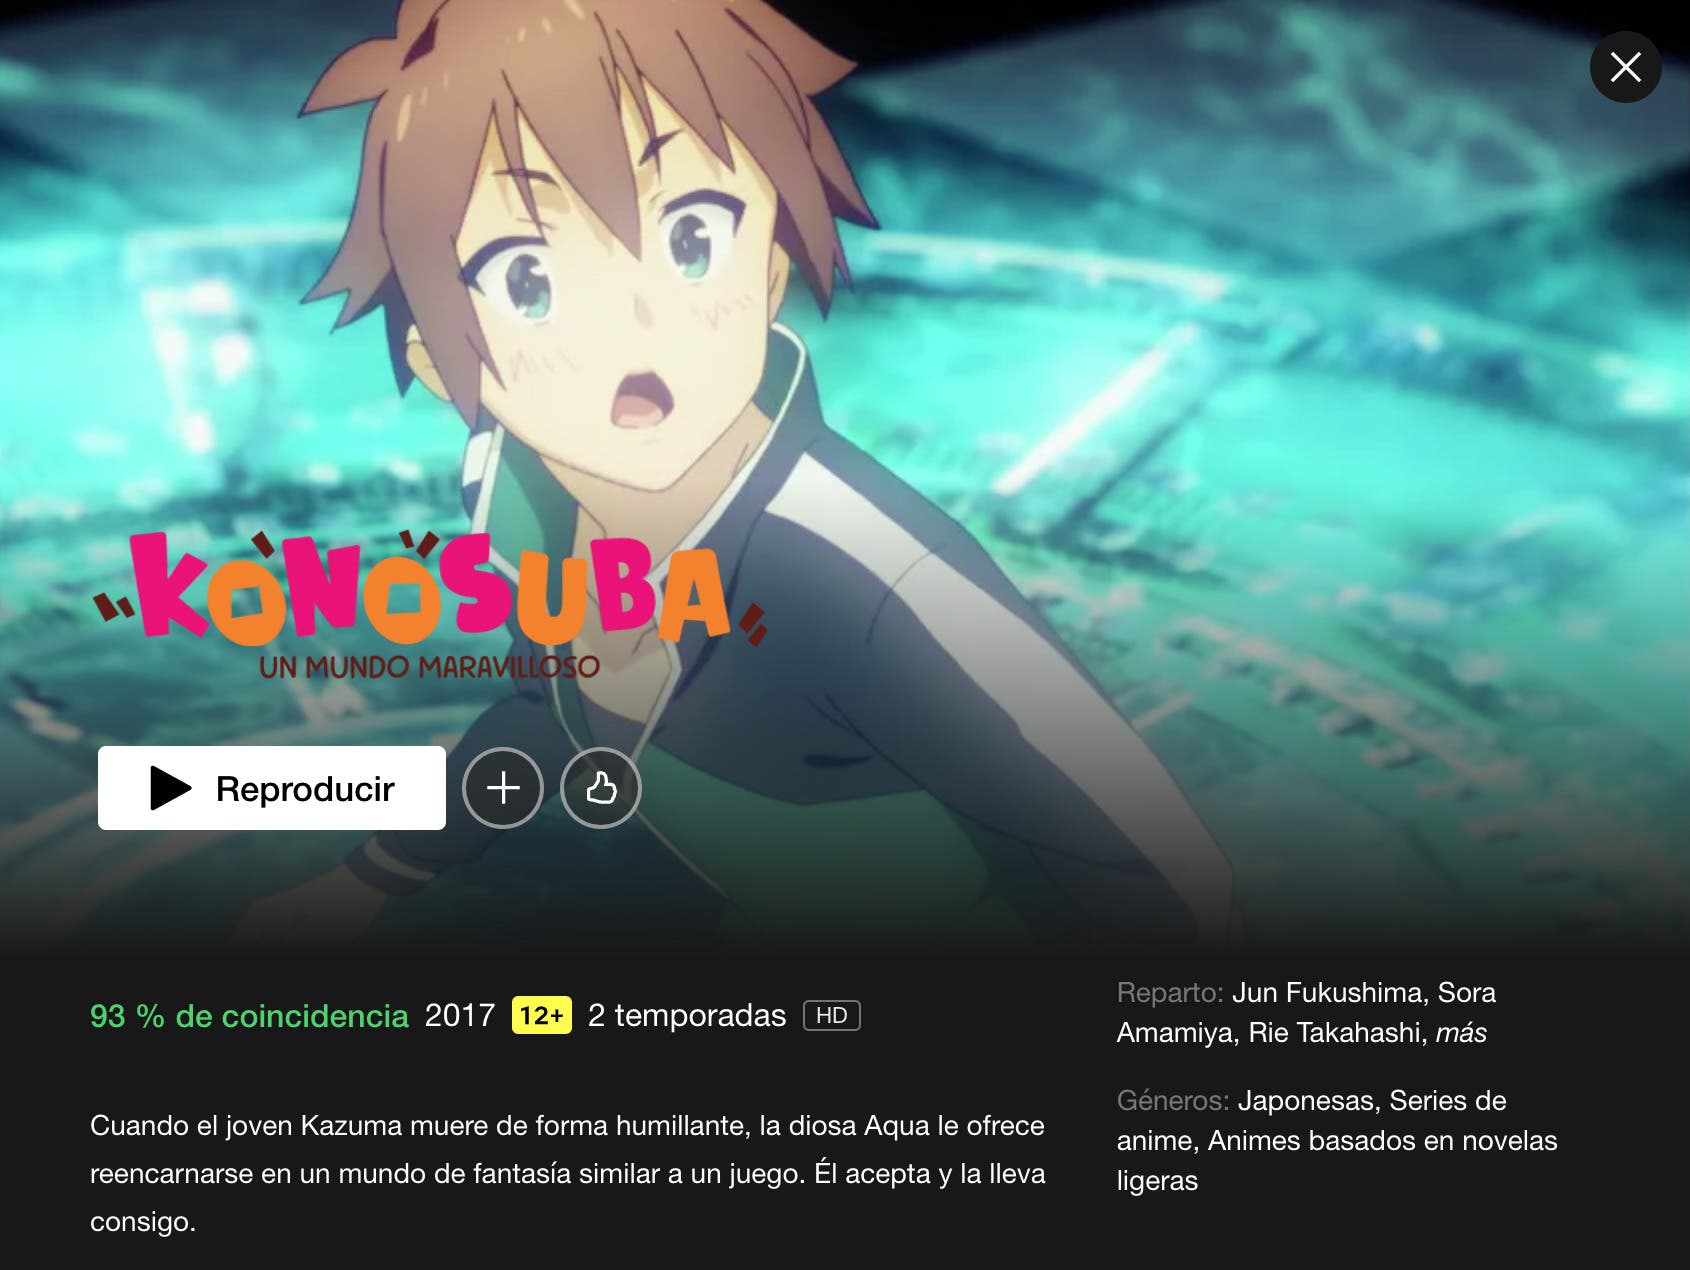 KonoSuba ya está disponible en Netflix España